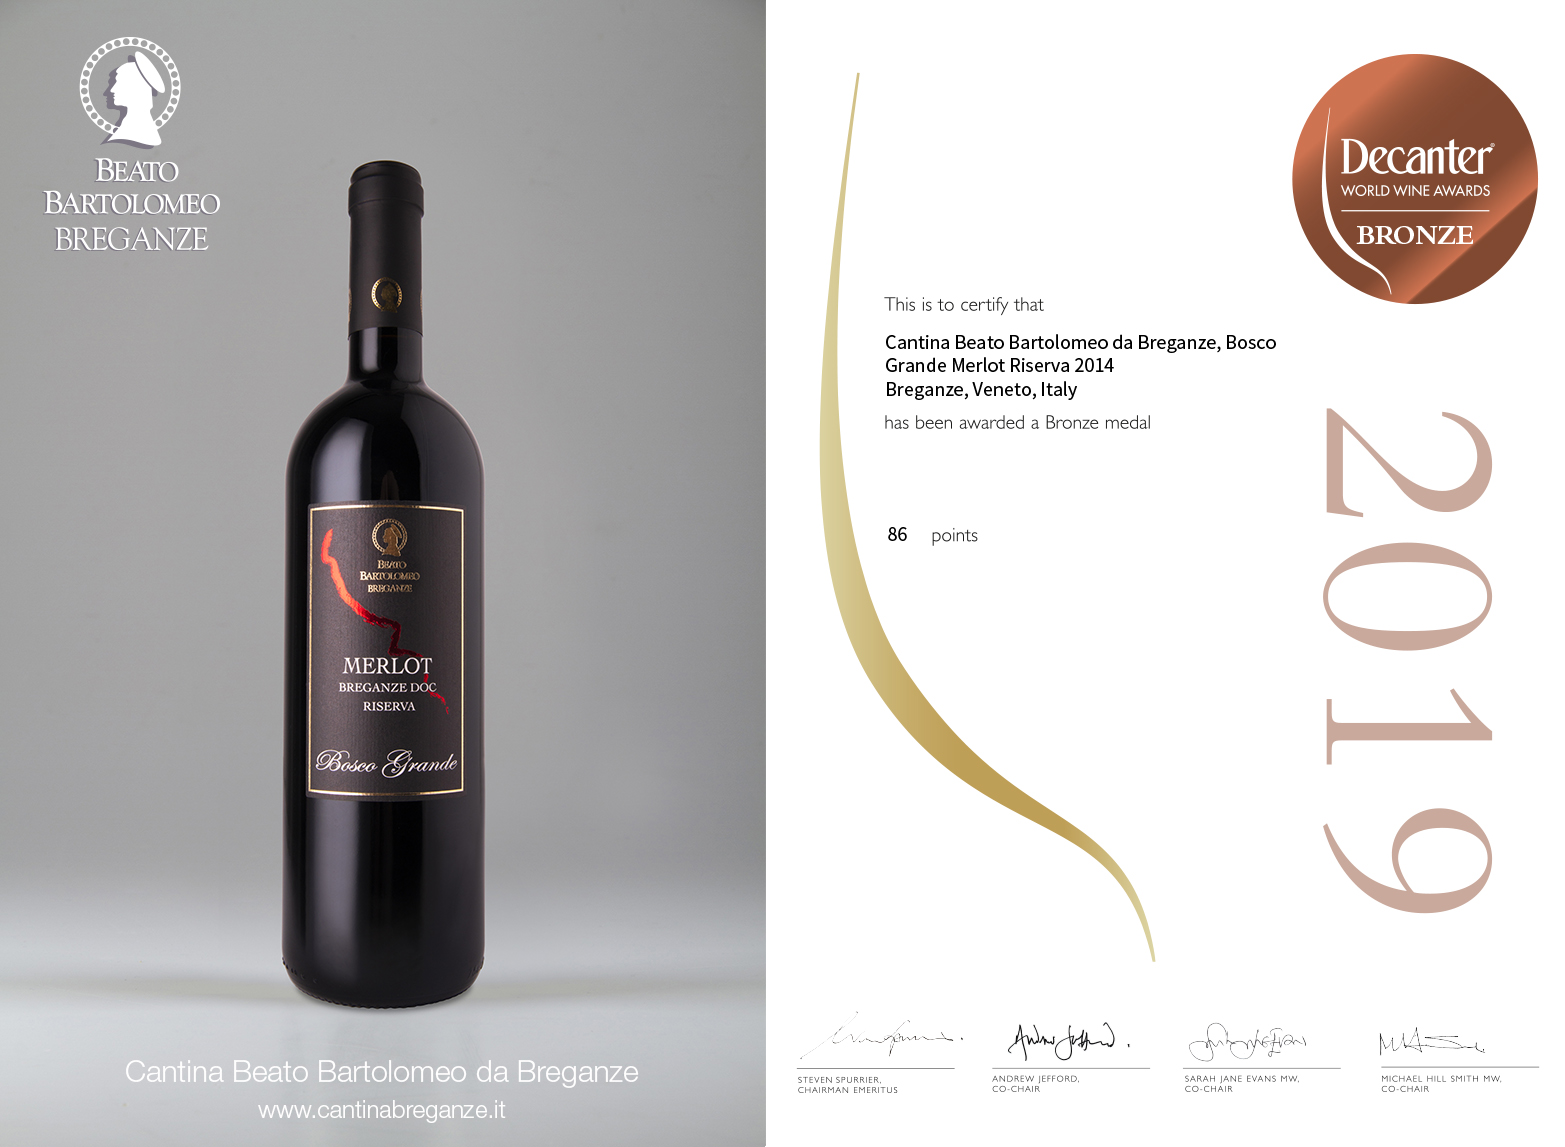 Merlot Breganze Doc Riserva “Bosco Grande” Decanter World Wine Awards 2019